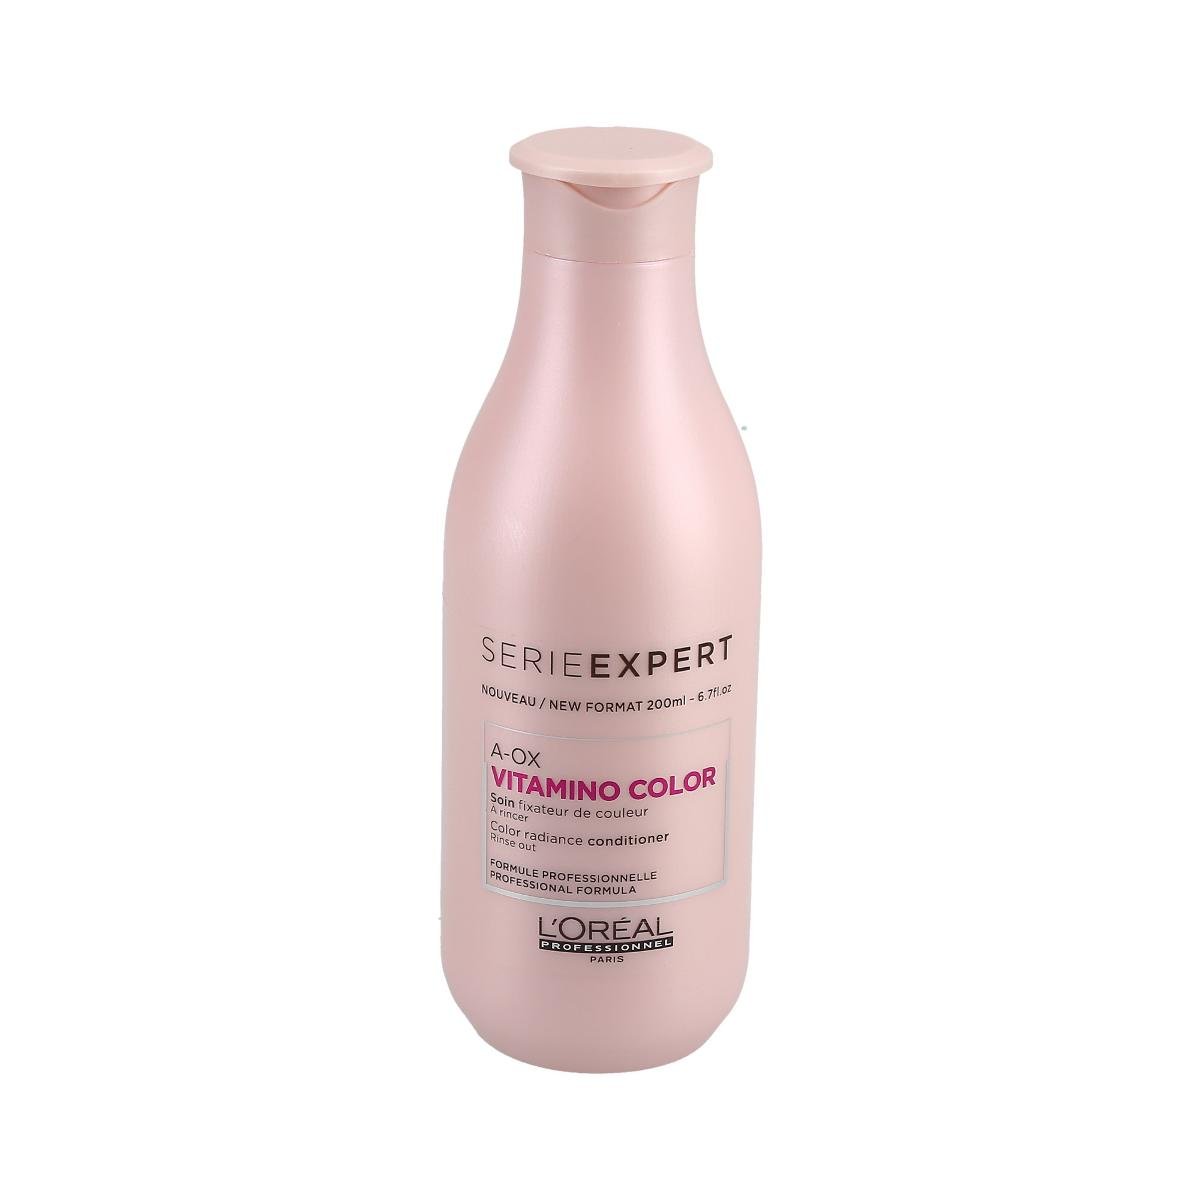 loreal professionnel vitamino color a-ox shampoo szampon do włosów farbowanych